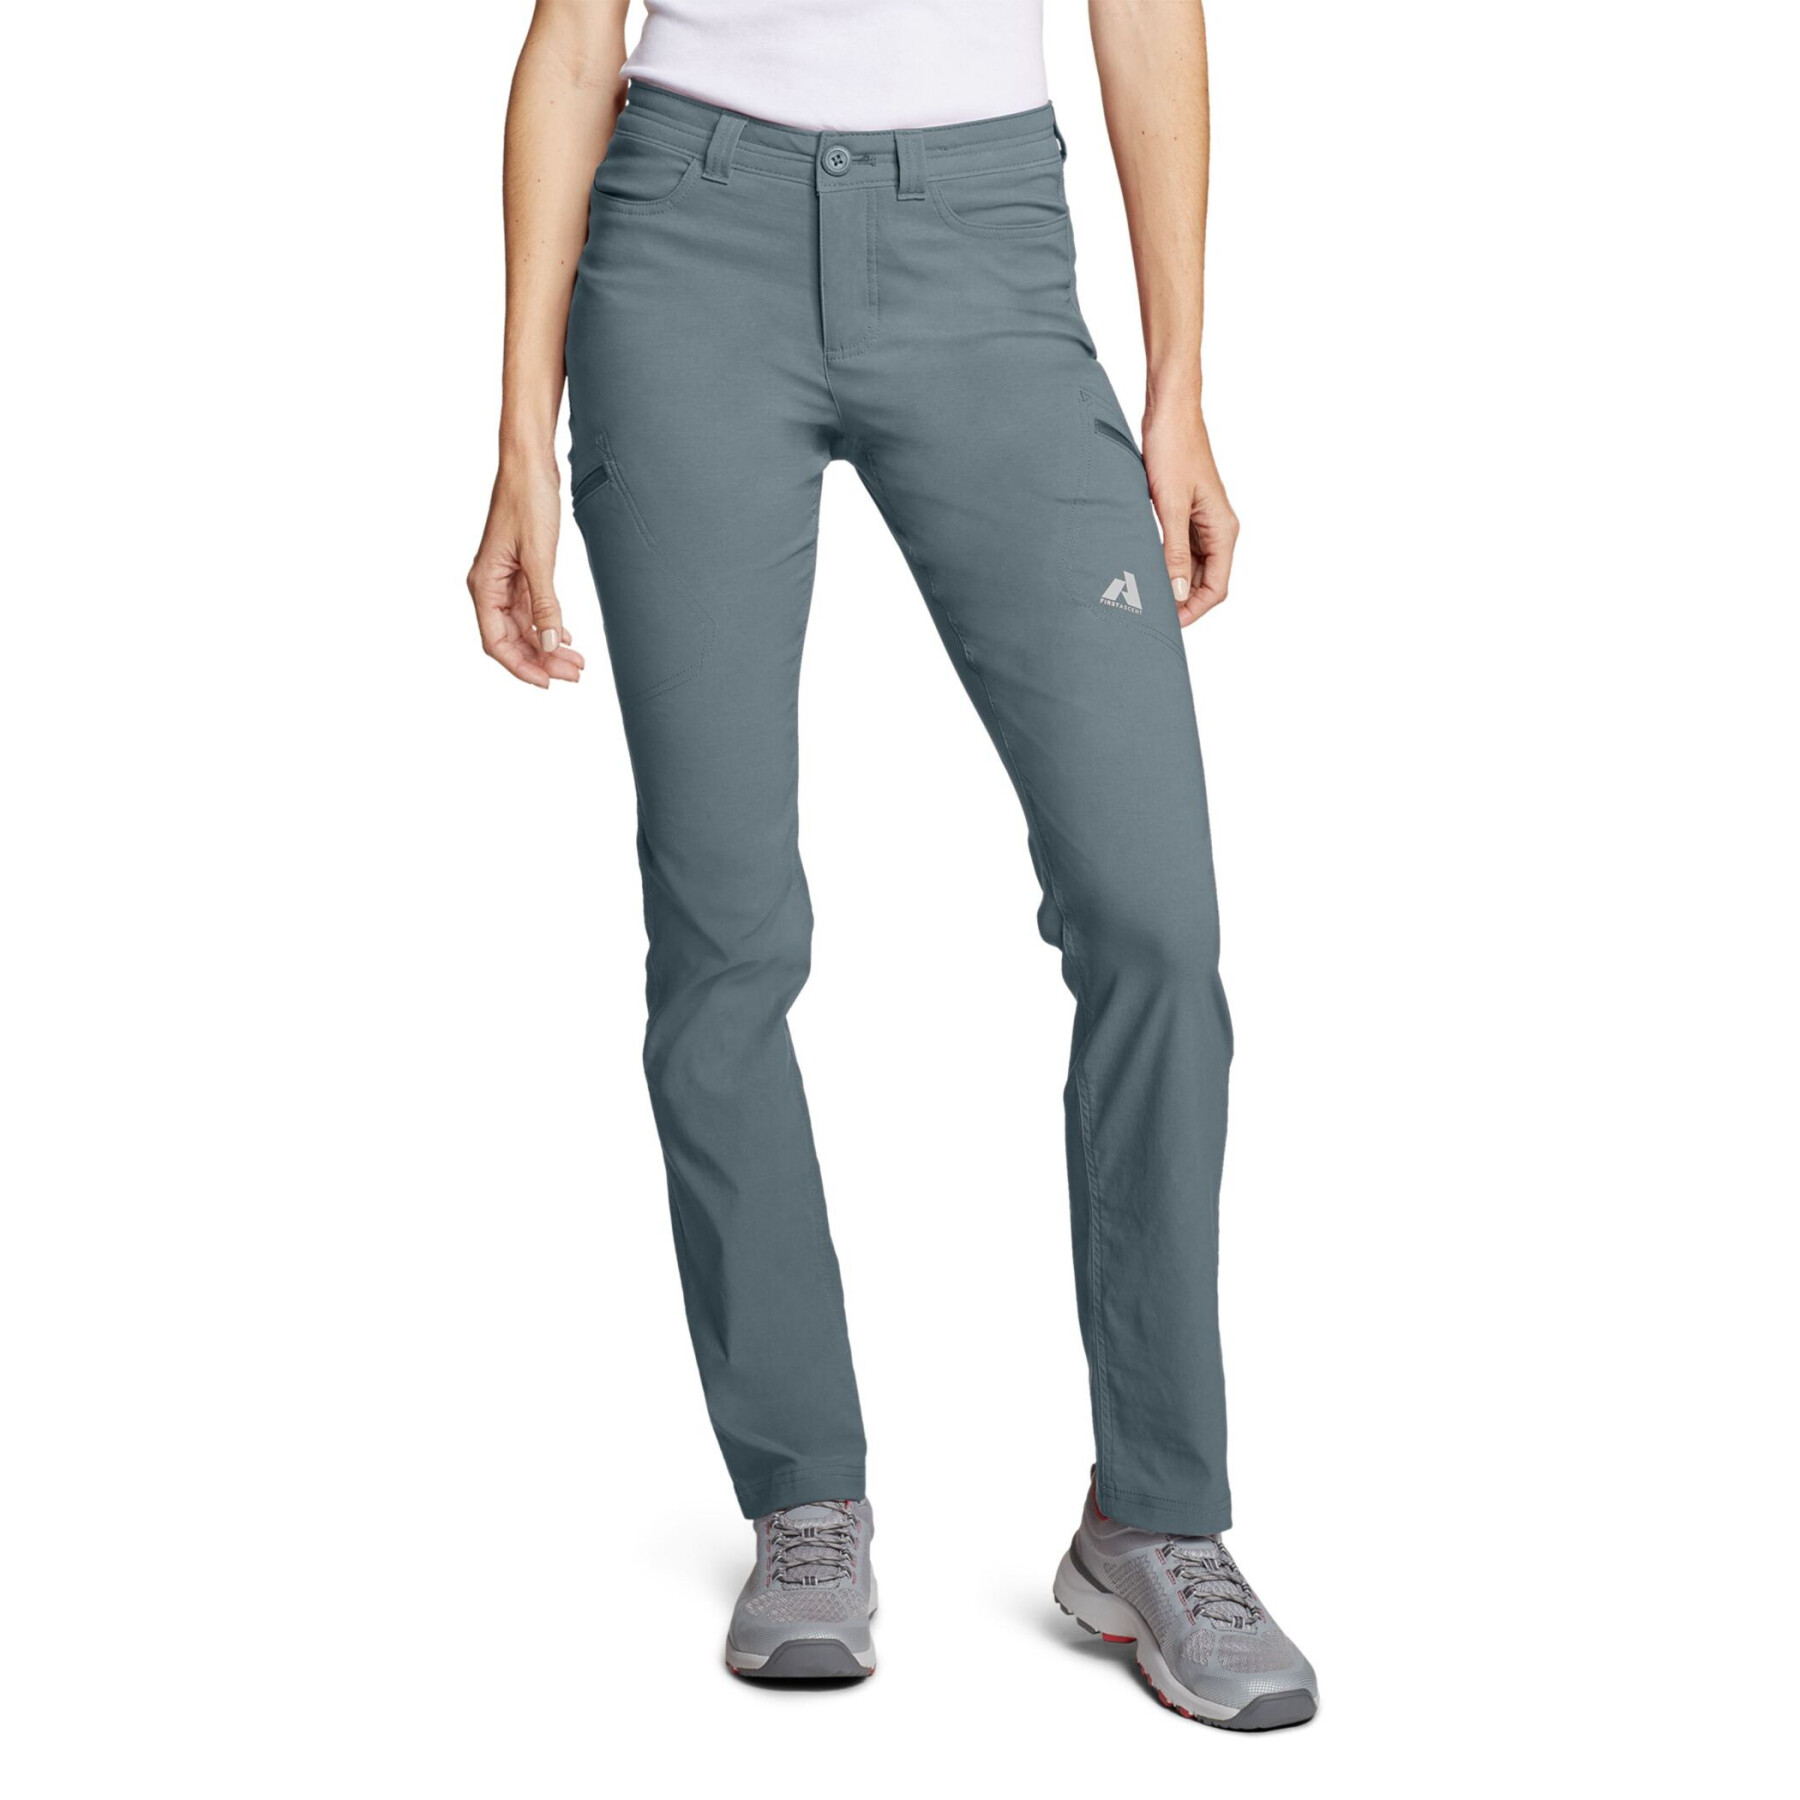 Buy Eddie Bauer Men's Flex Sport Wrinkle-Resistant Chino Pants, Lt Khaki  Regular 36/ at Amazon.in